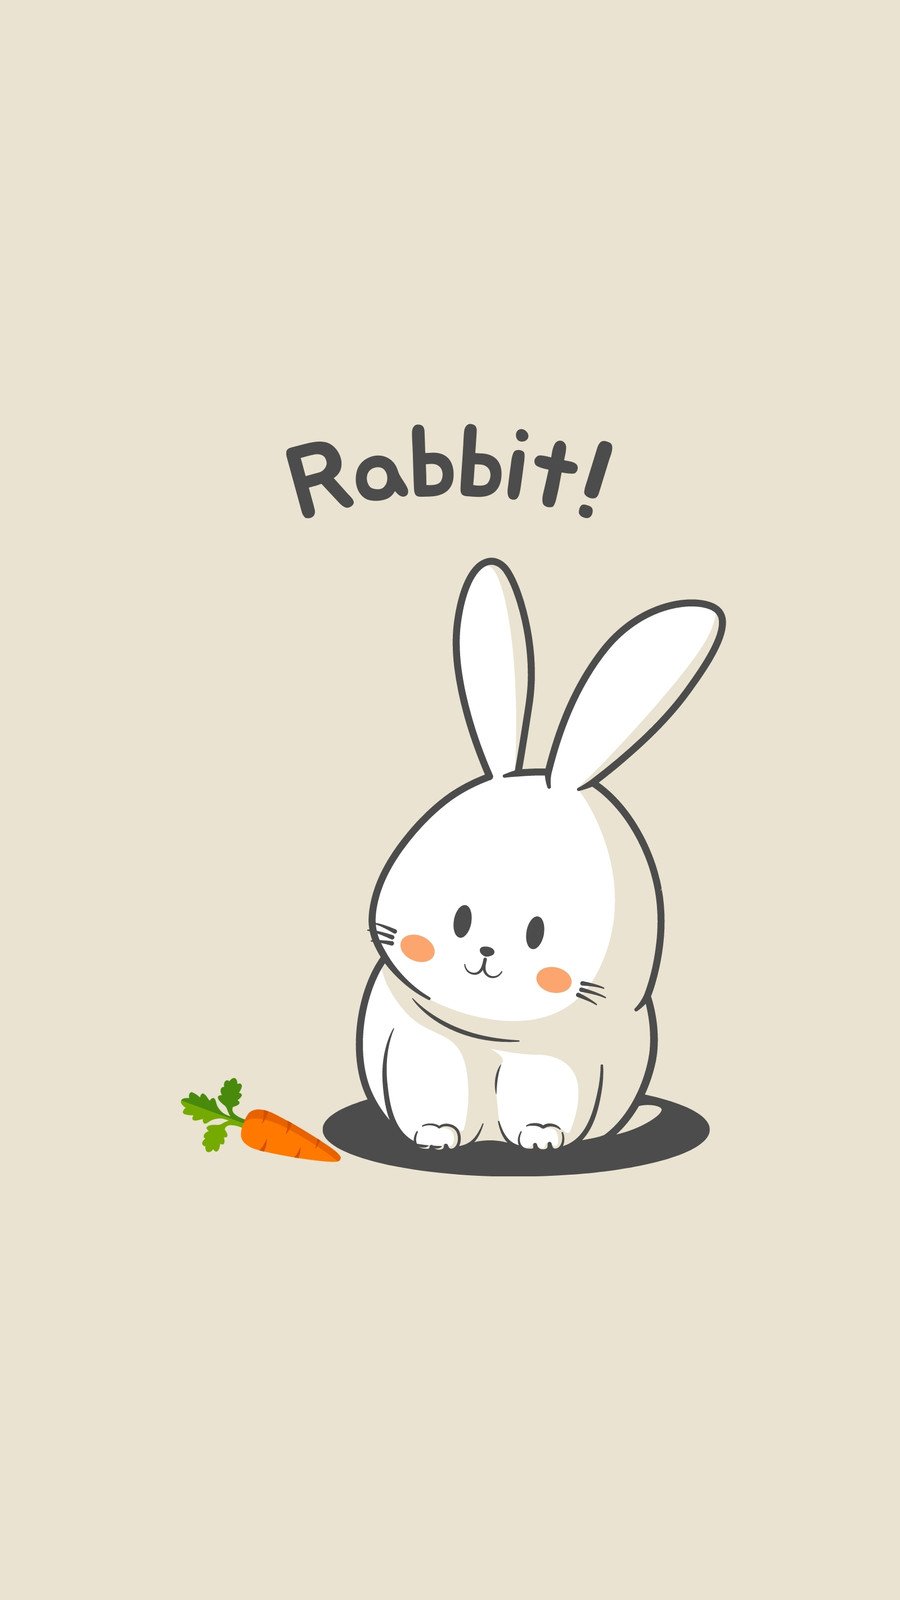 Rabbit Photos, Download The BEST Free Rabbit Stock Photos & HD Images